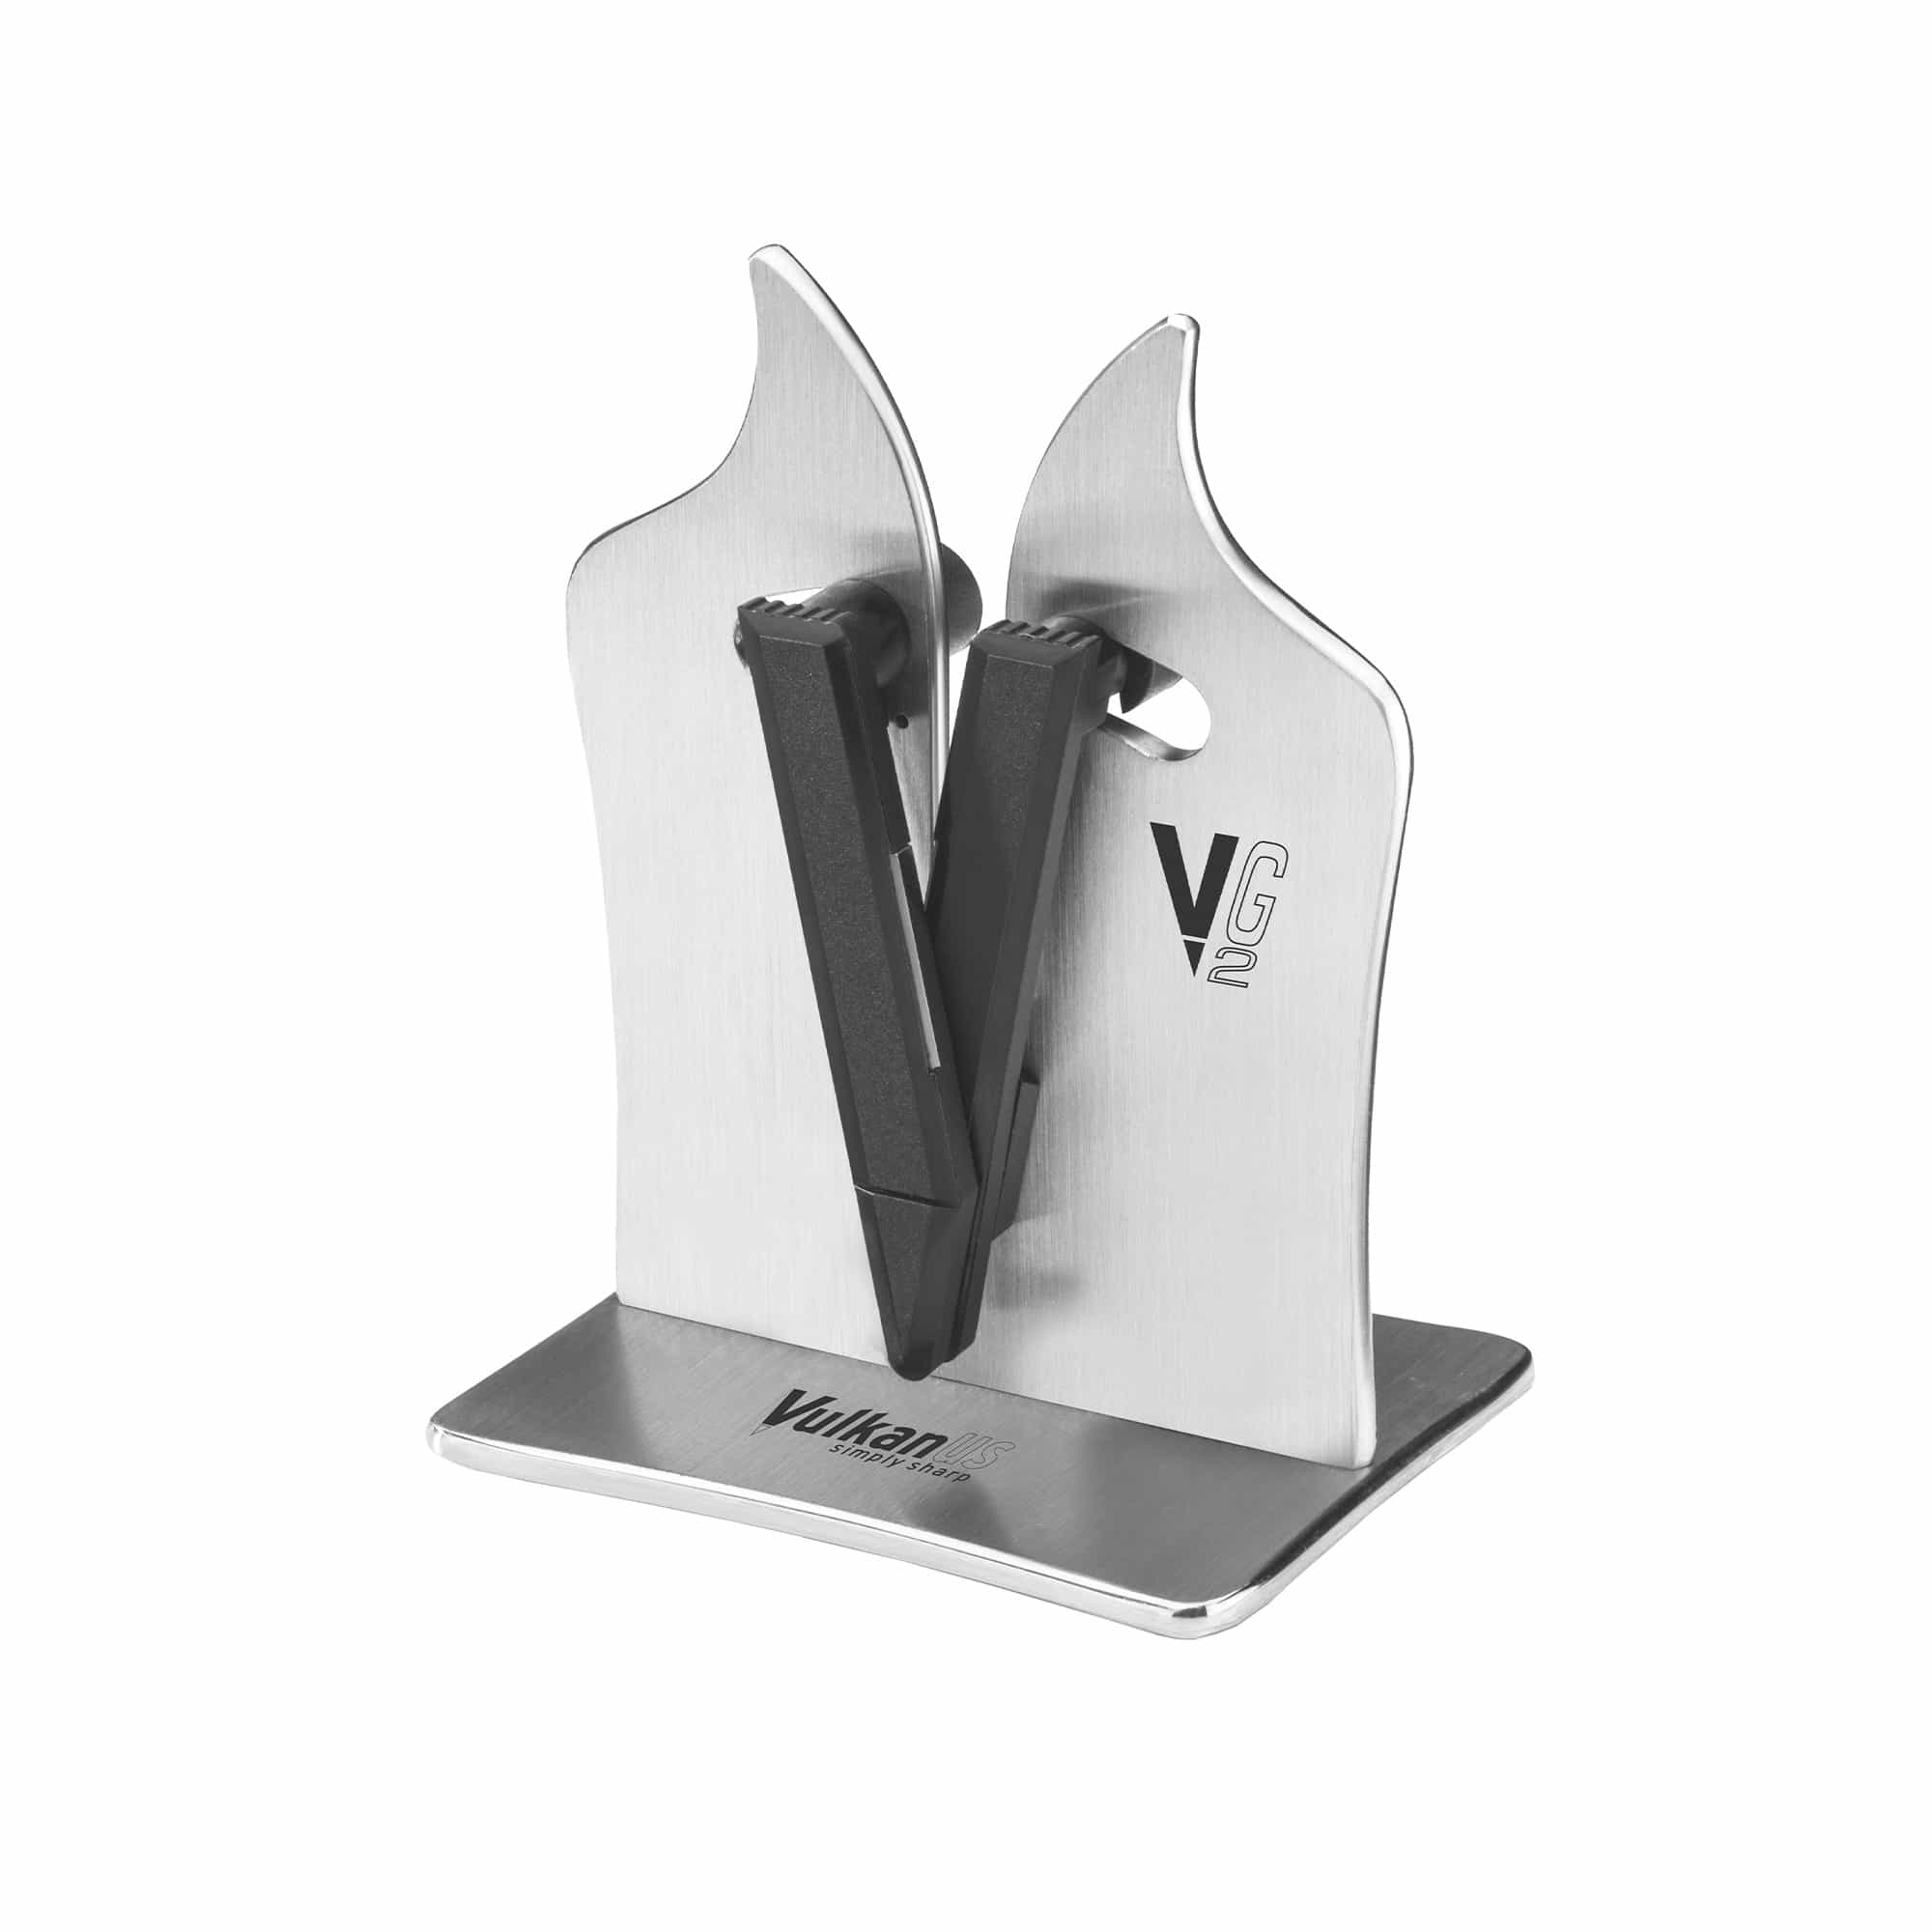 VG2 Professional Knivsliper